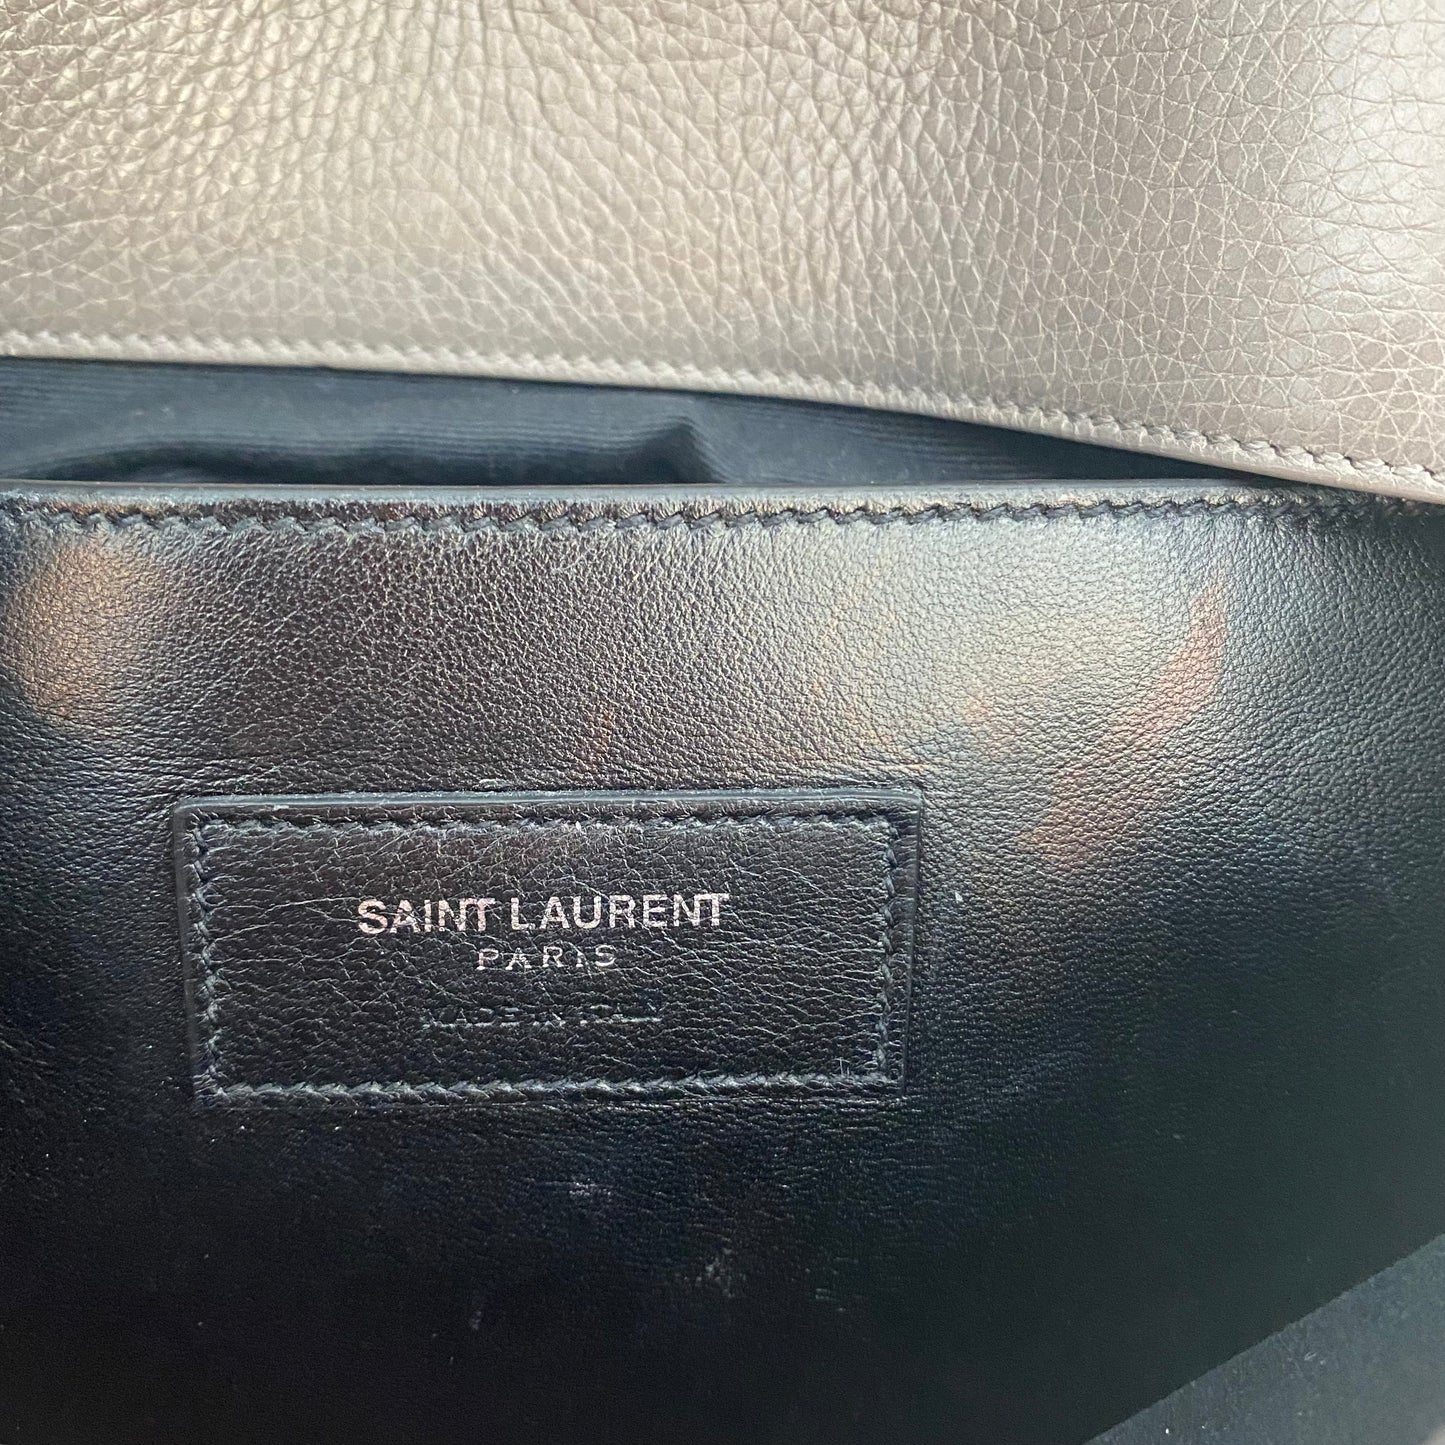 Saint Laurent West Hollywood Bag